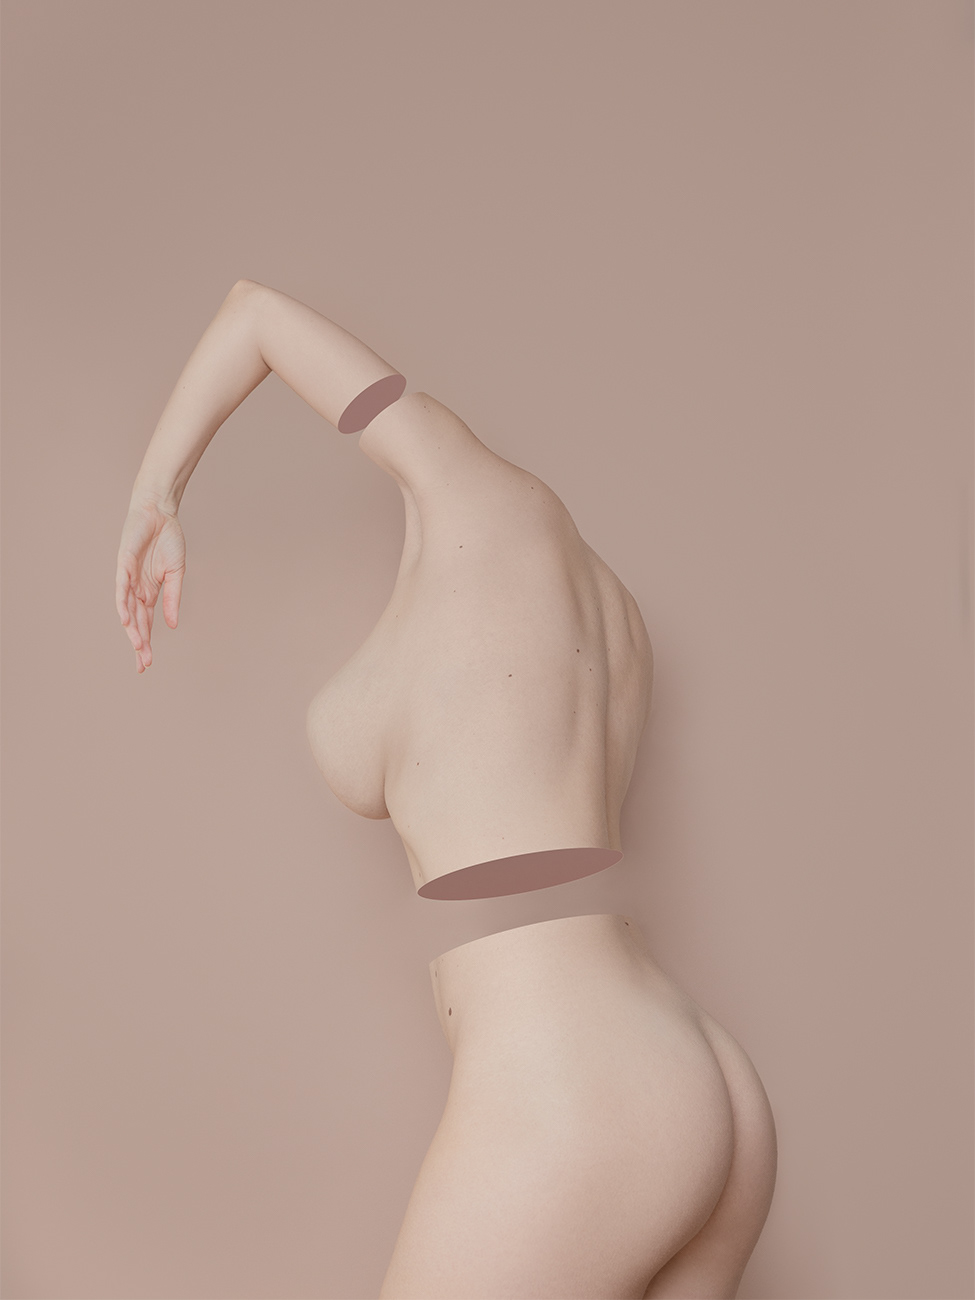 Body Language, The Sublime Fine Art Photography Of Viktoria Andreeva (1)